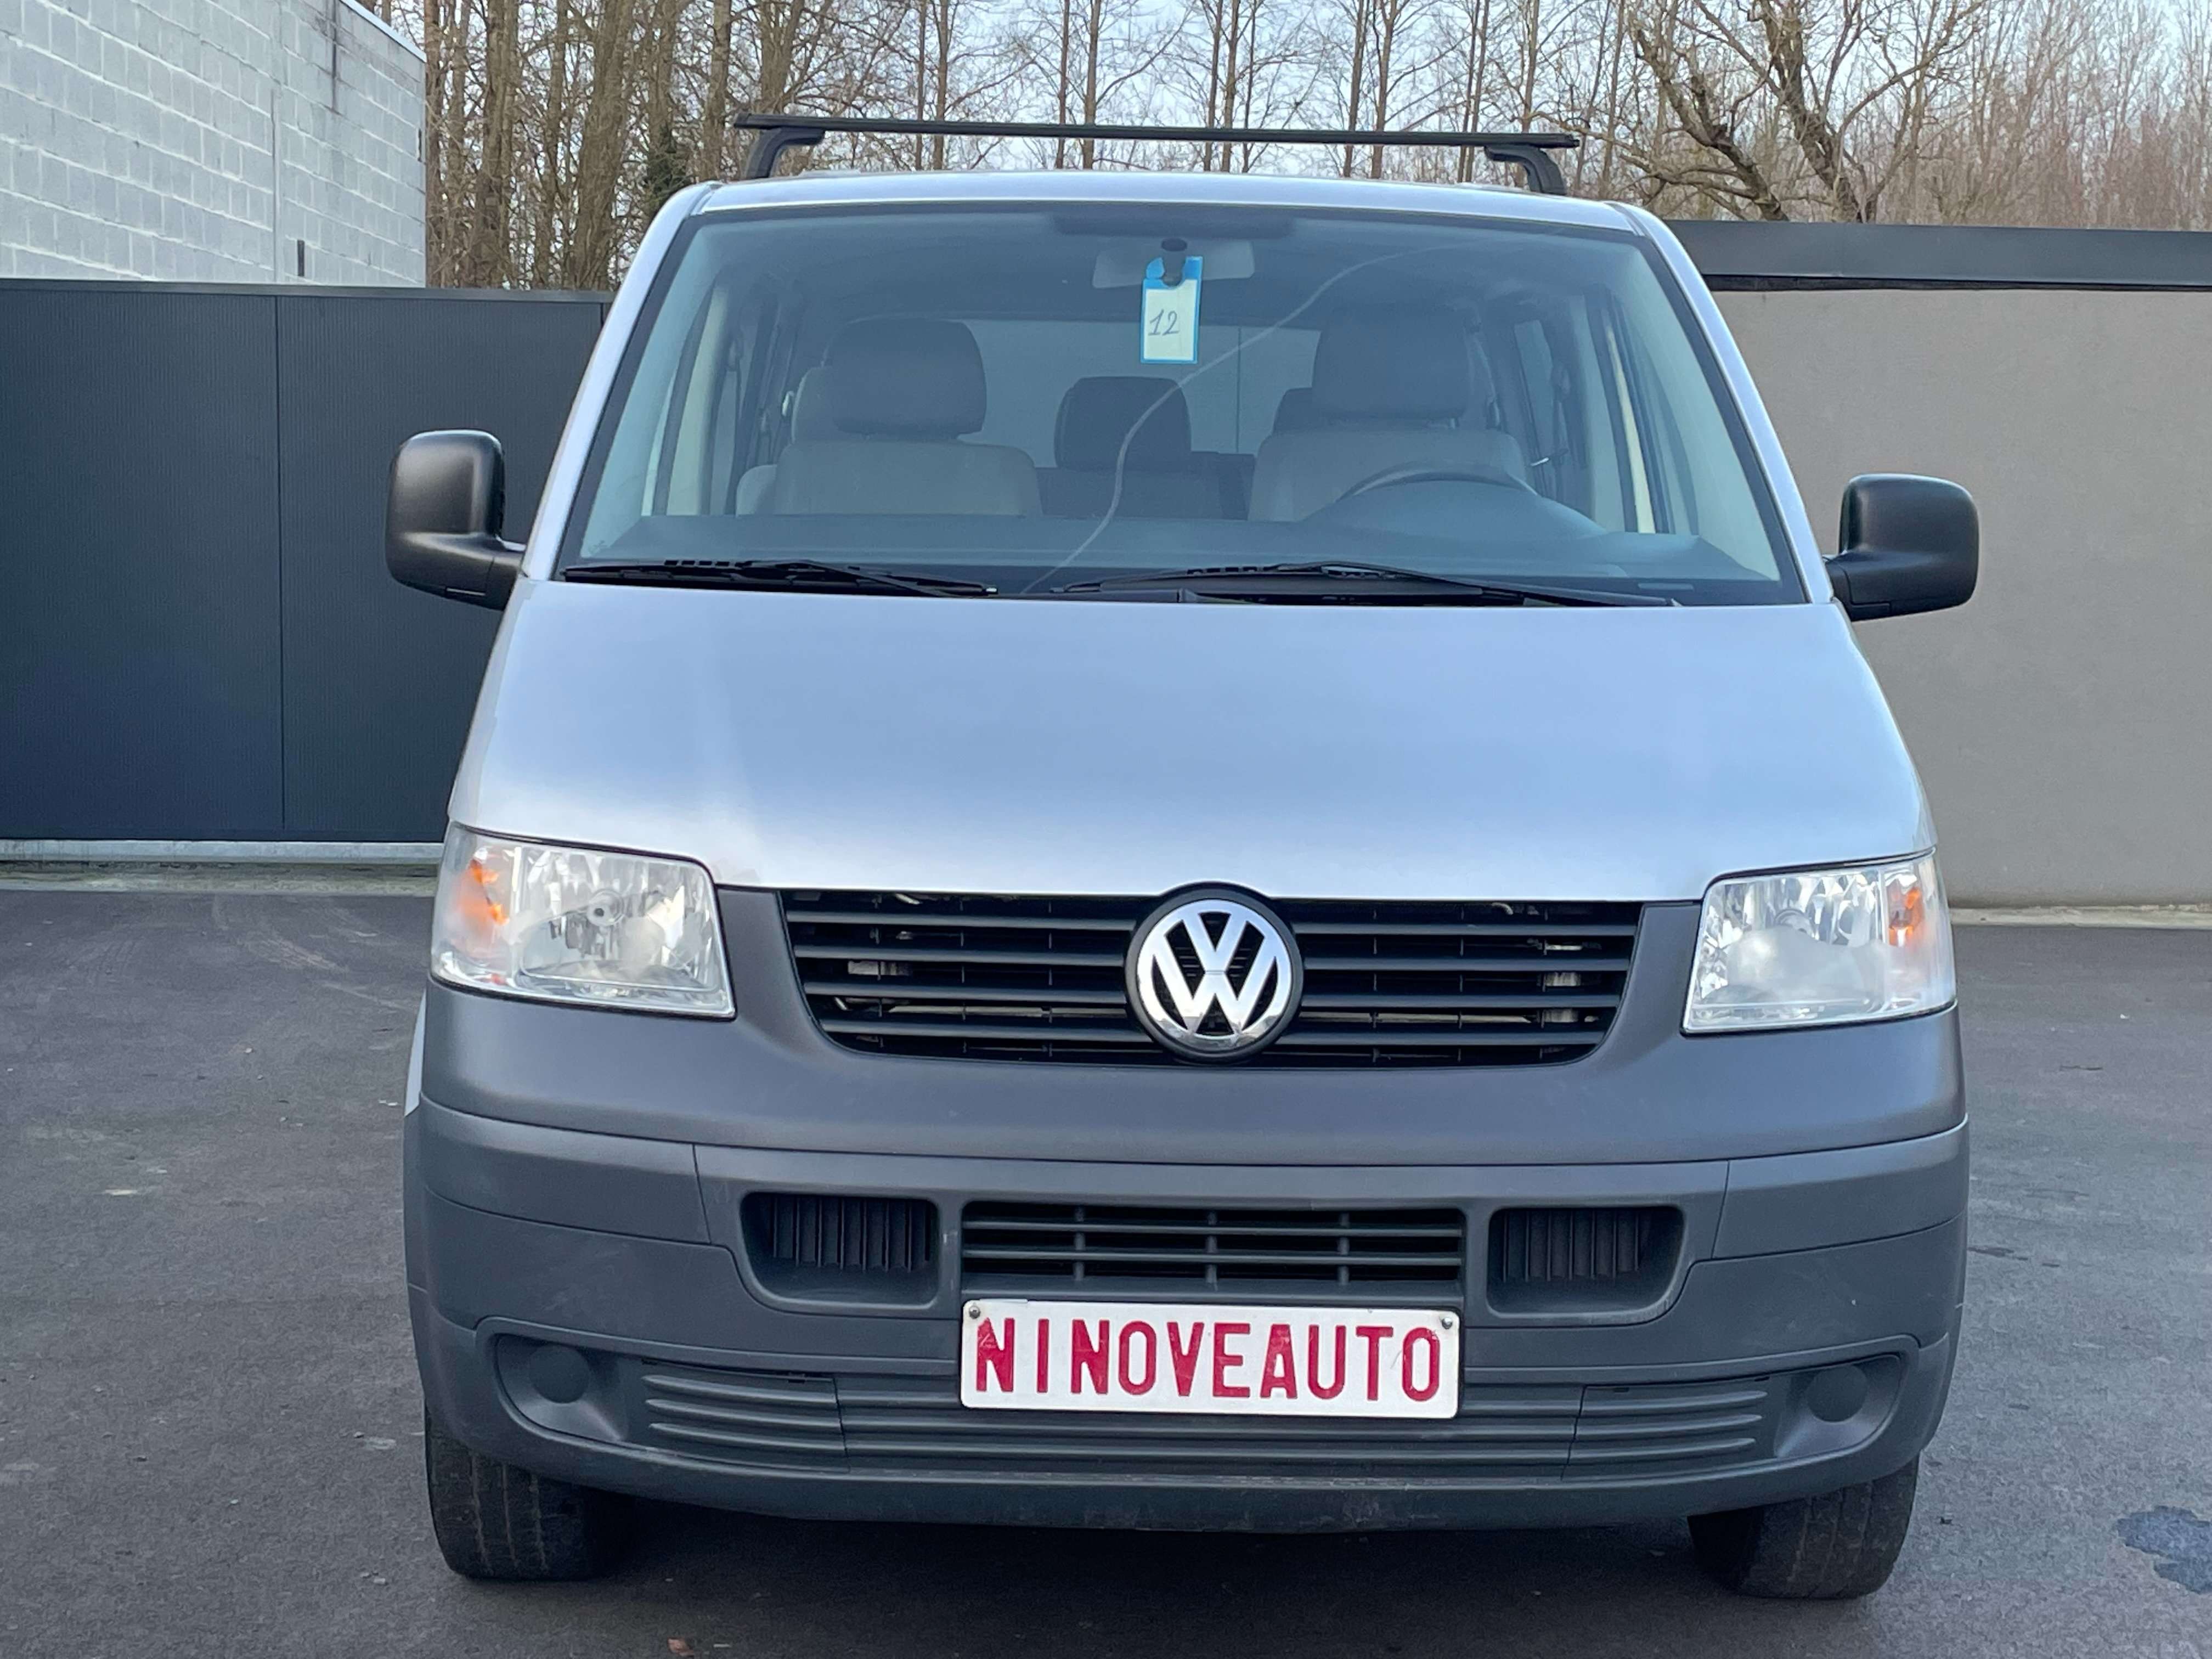 Ninove auto - Volkswagen Transporter